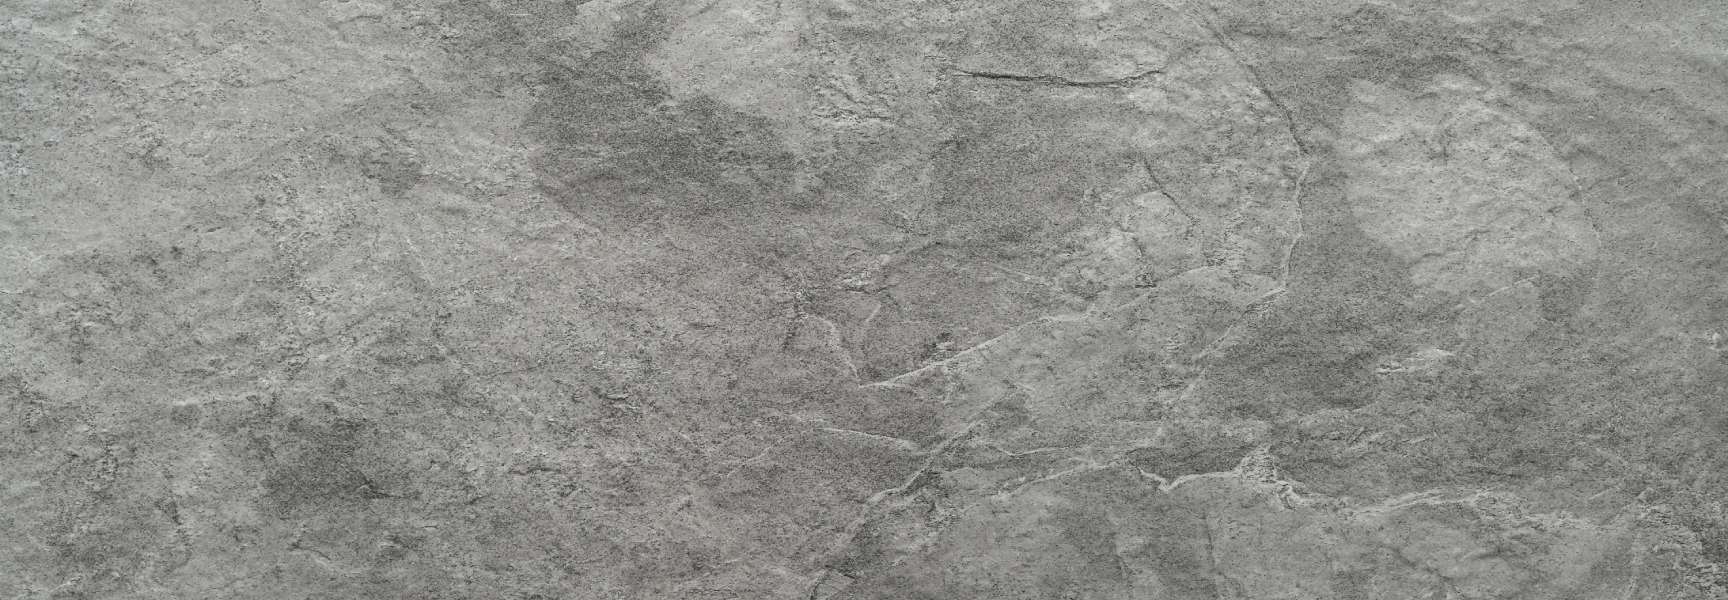 macro image of grey stone